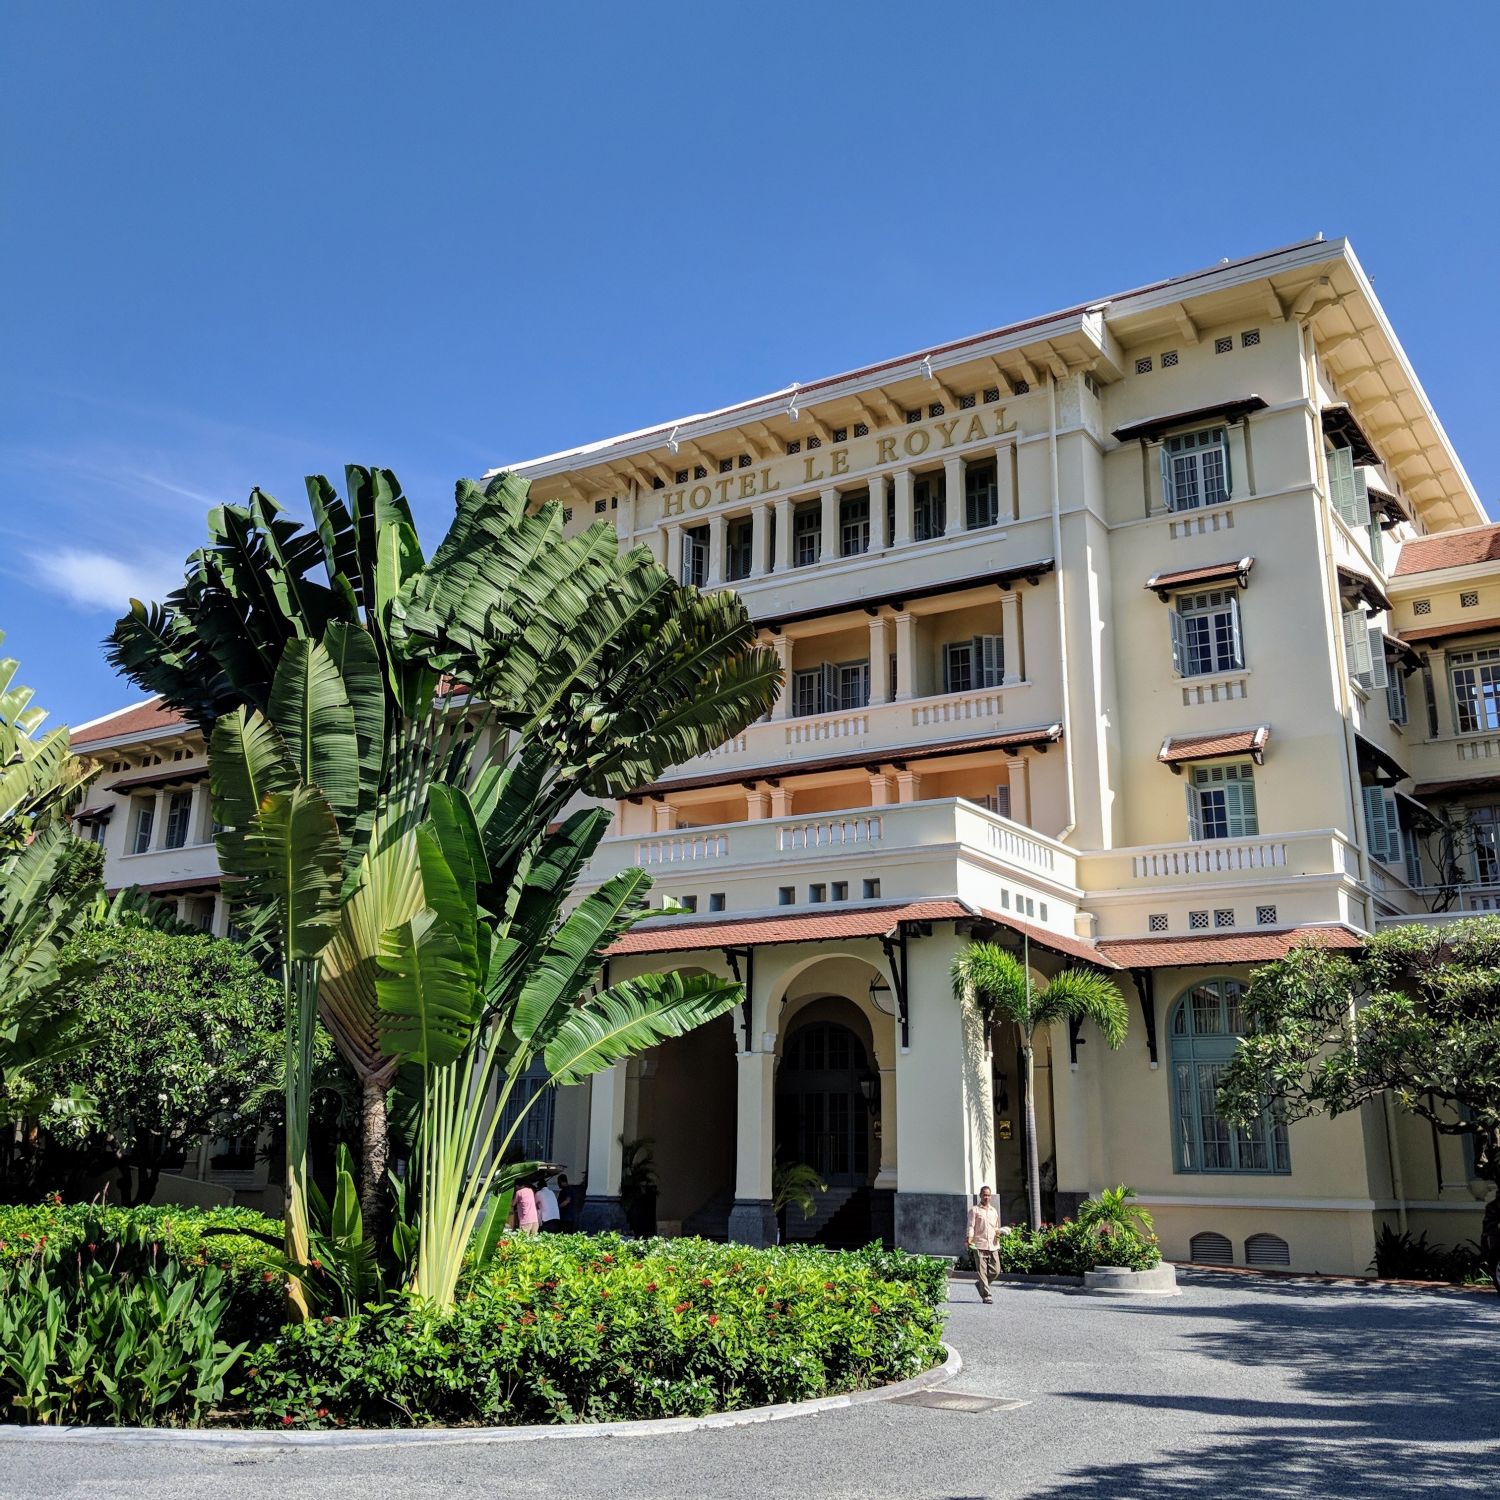 raffles hotel le royal phnom penh entrance